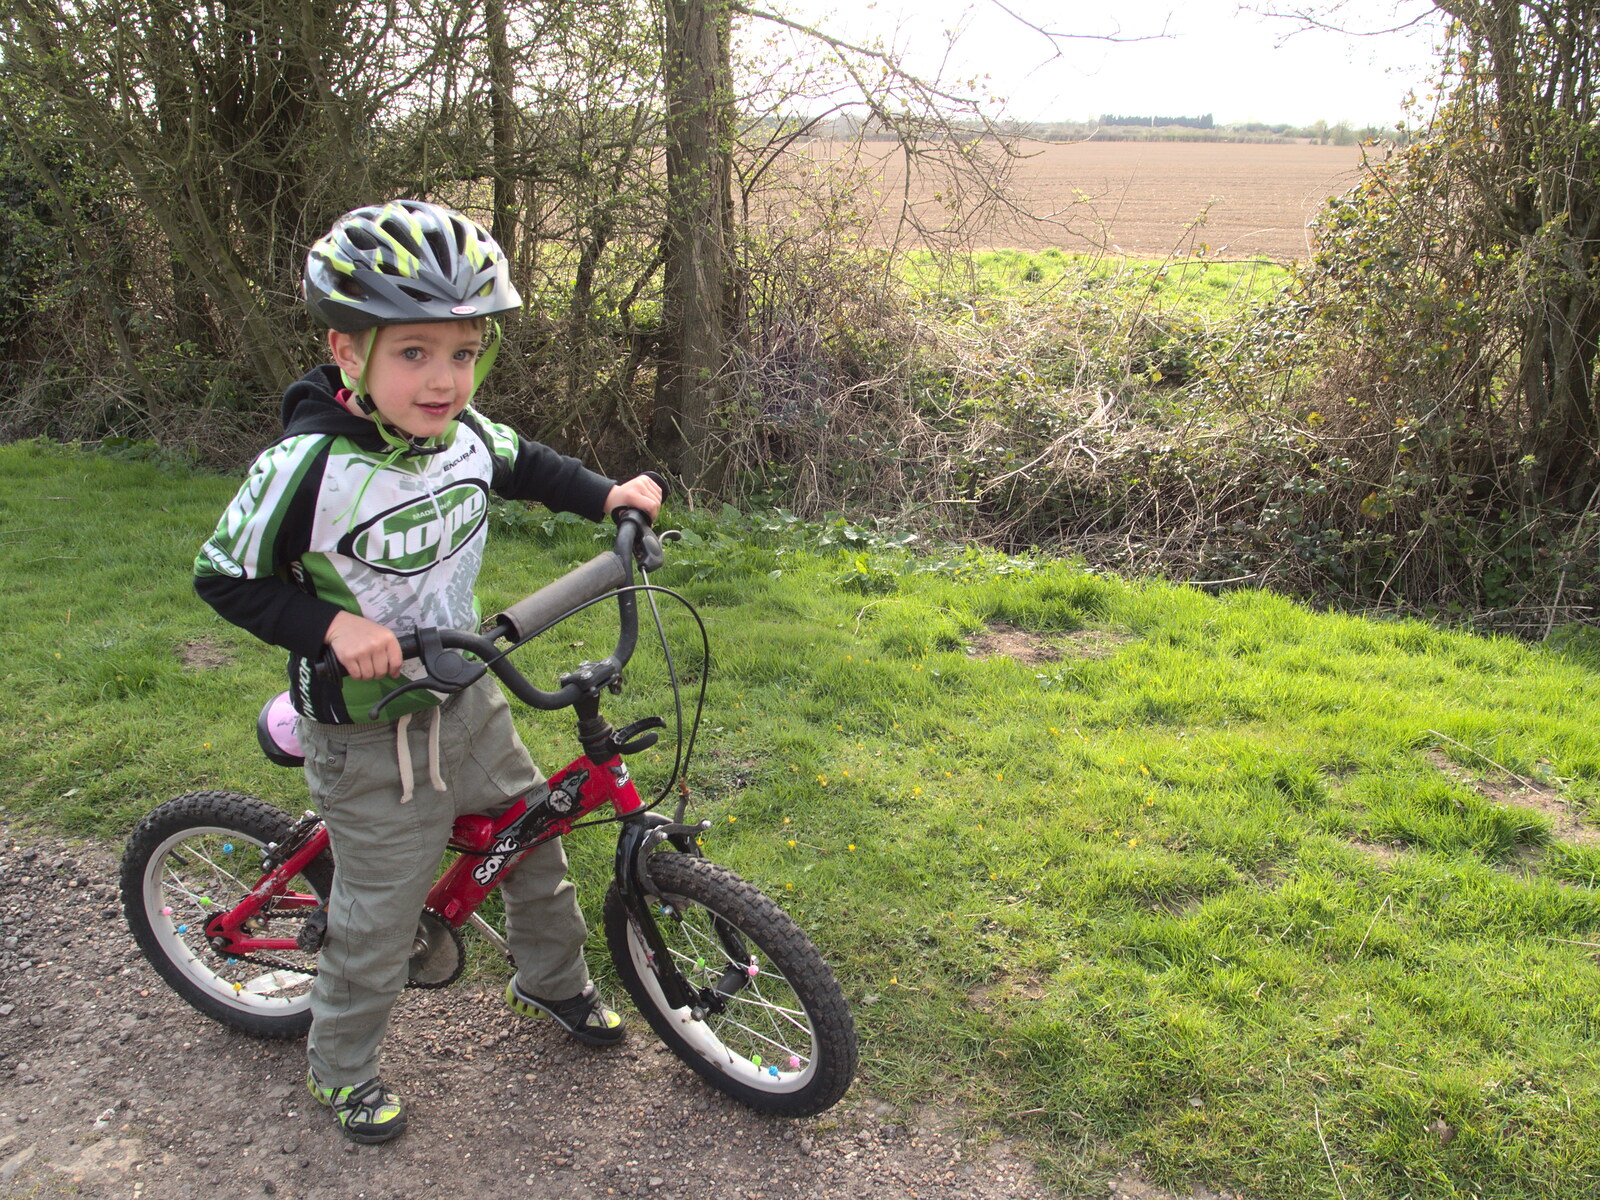 Fred on his bike from Making Dens: Rosie's Birthday, Thornham, Suffolk - 25th April 2015